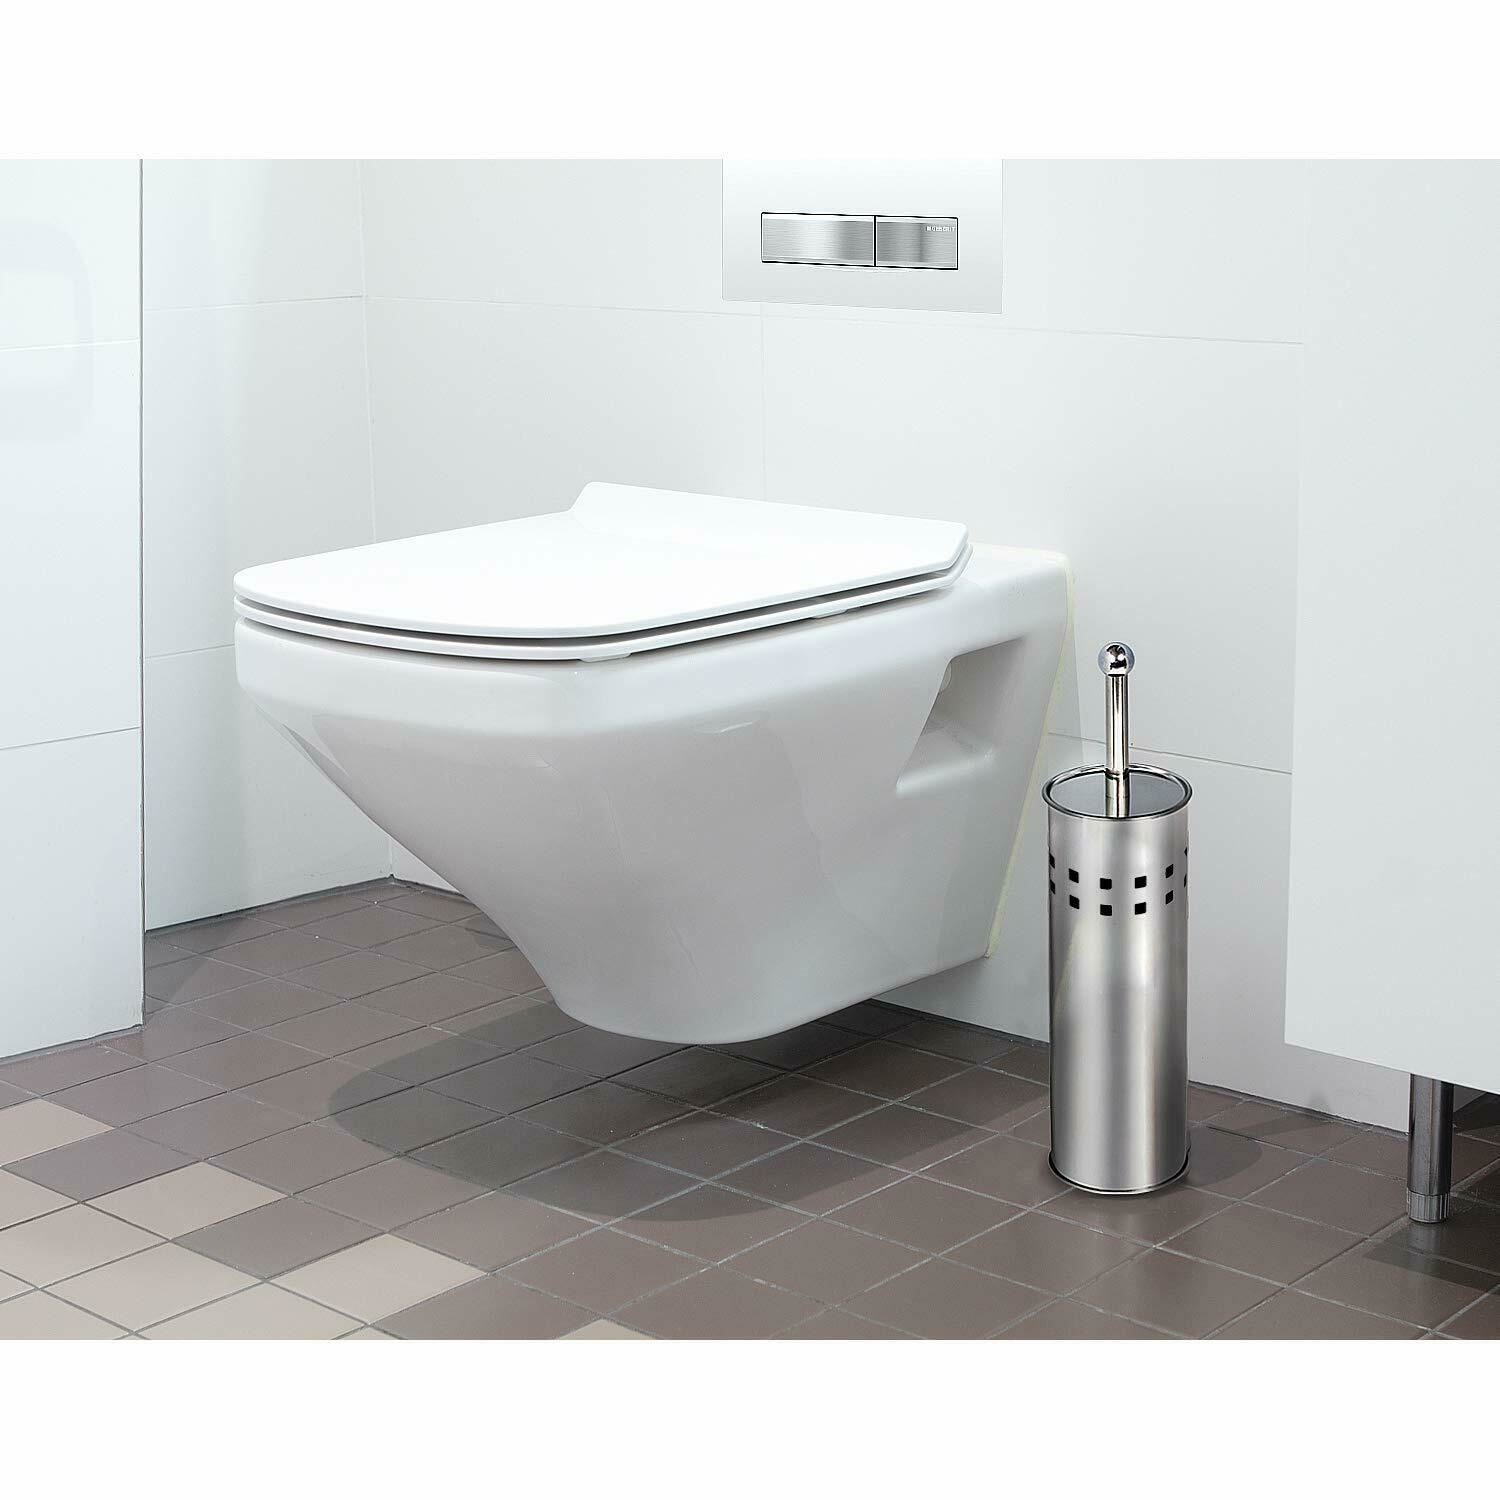 Chrome Bathroom Toilet Brush & Holder Set Bravich LTD.